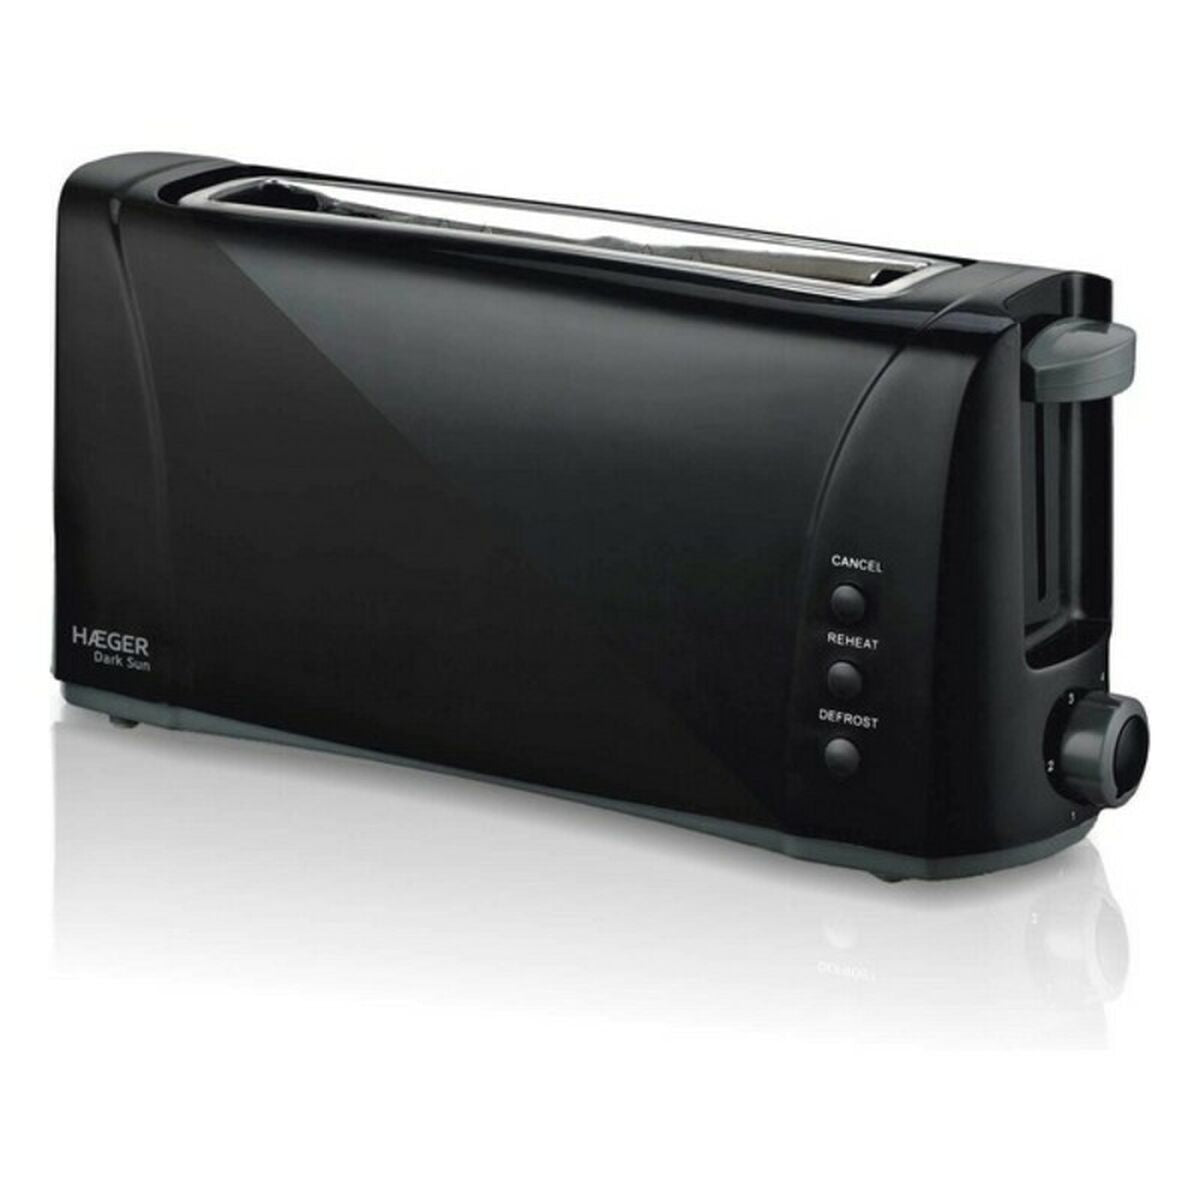 Toaster Haeger 1000 W - CA International 